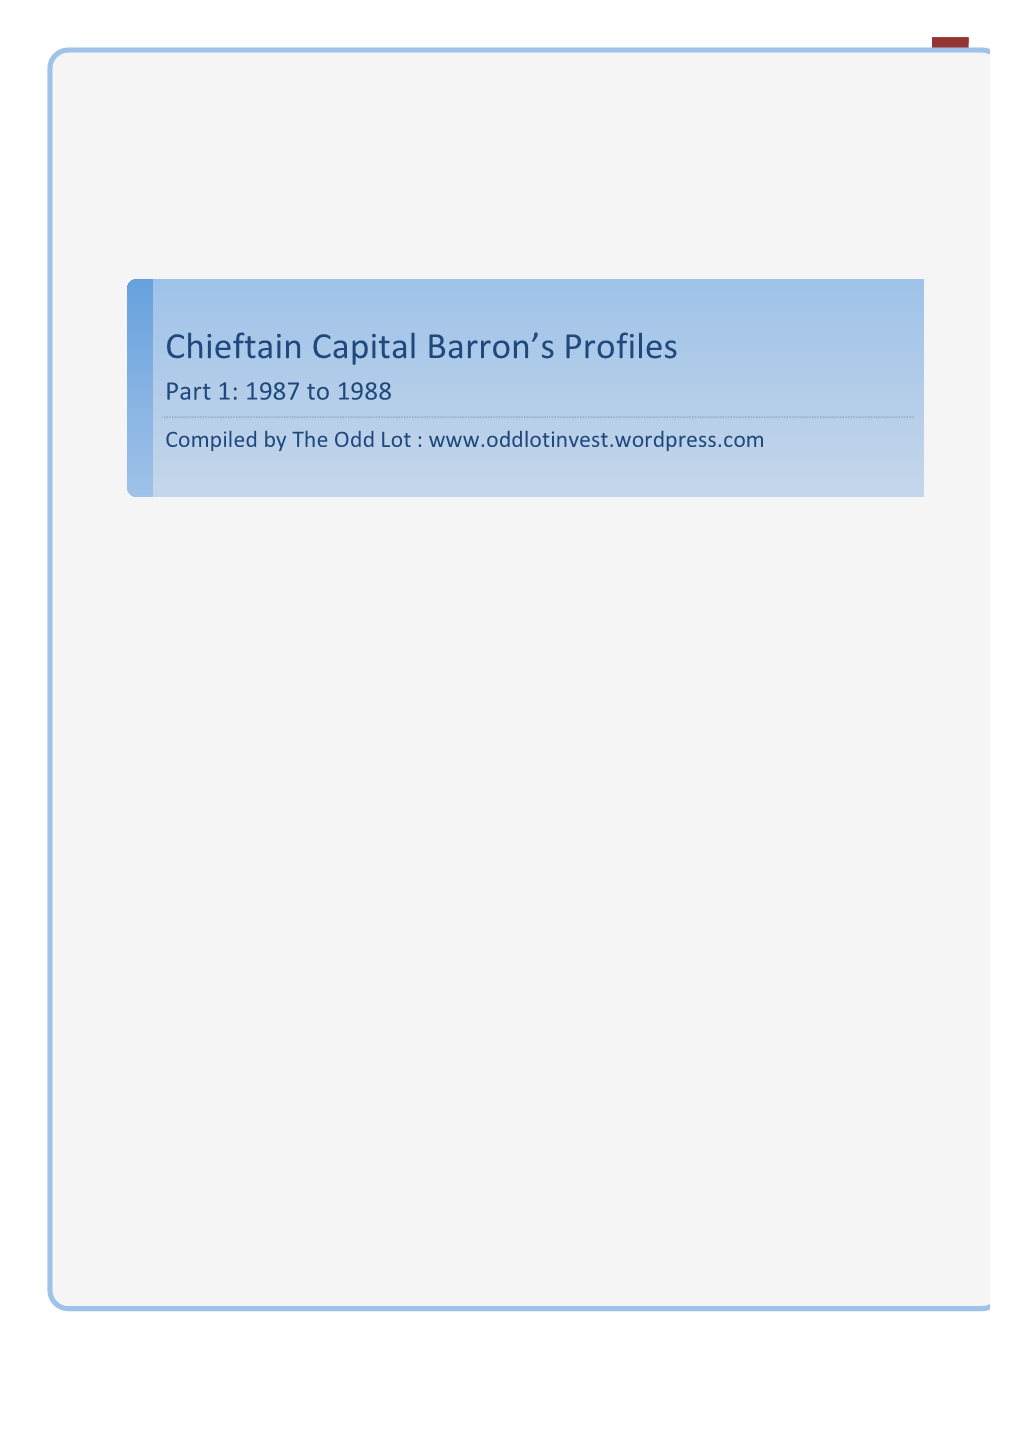 Chieftain Capital Barron's Profiles